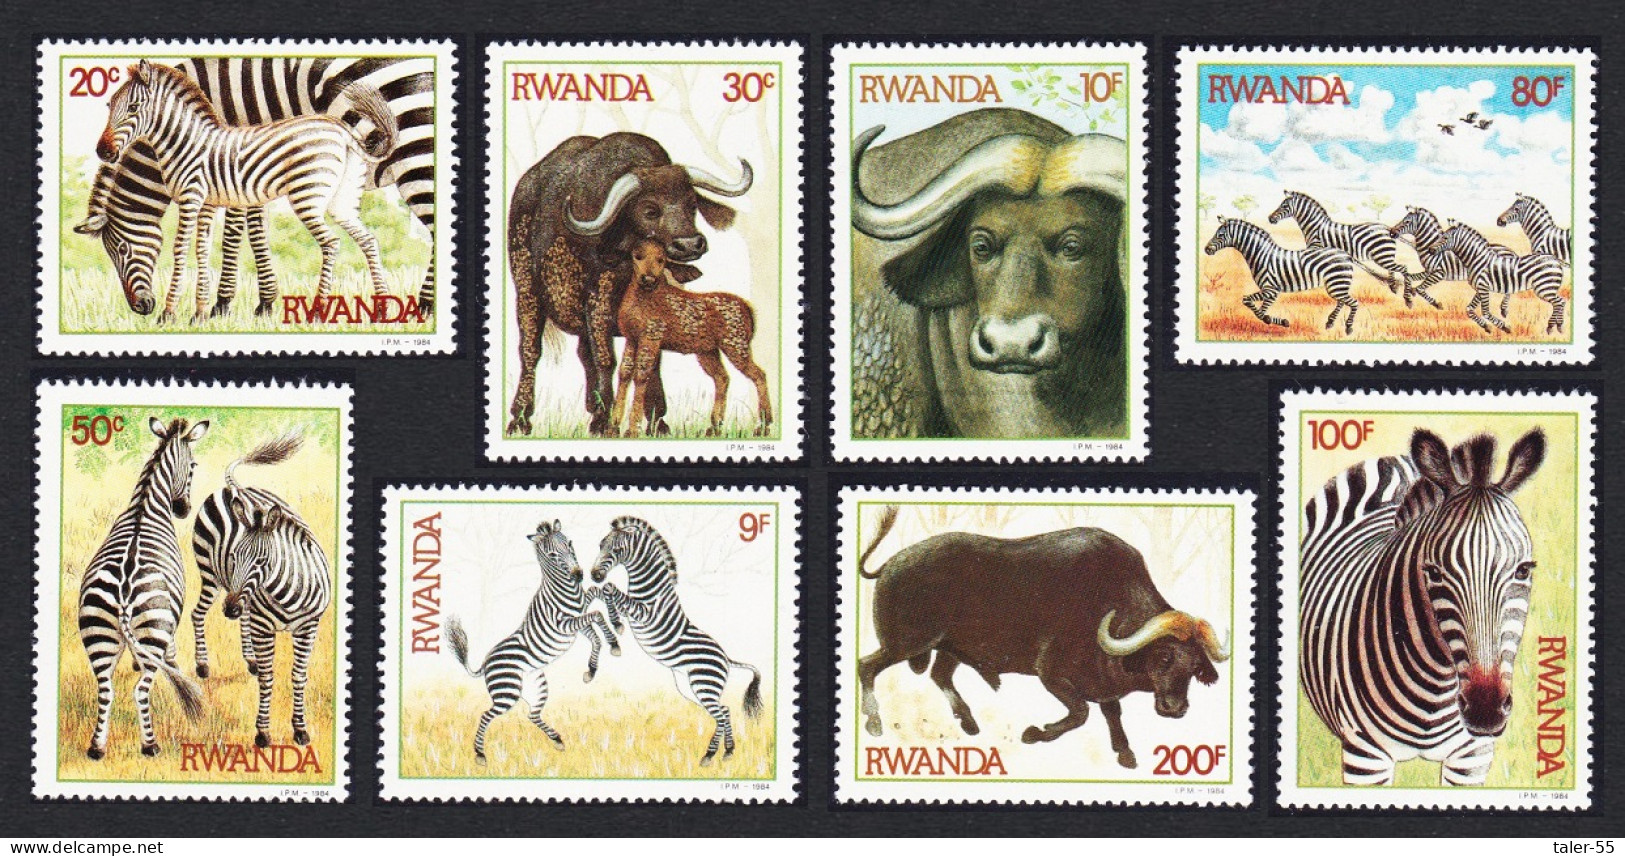 Rwanda Zebras And Buffaloes 8v 1984 MNH SG#1210-1217 Sc#1199-1206 - Unused Stamps